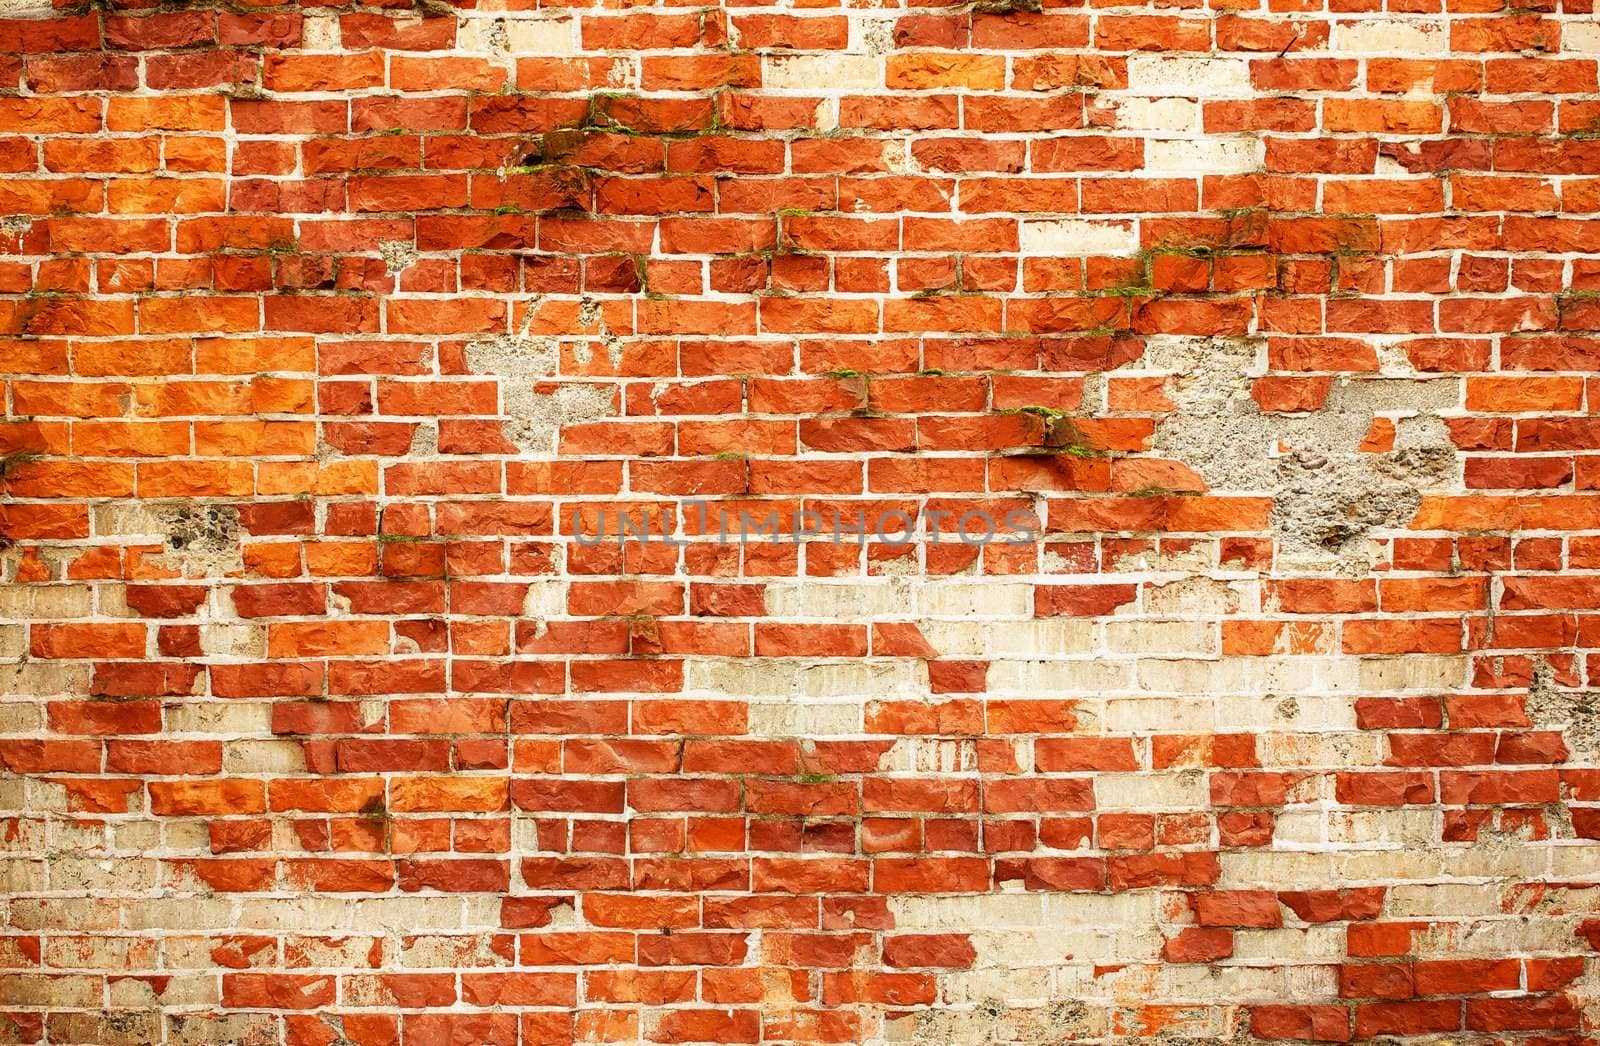 Weathered used brick wall horizontal by bobkeenan